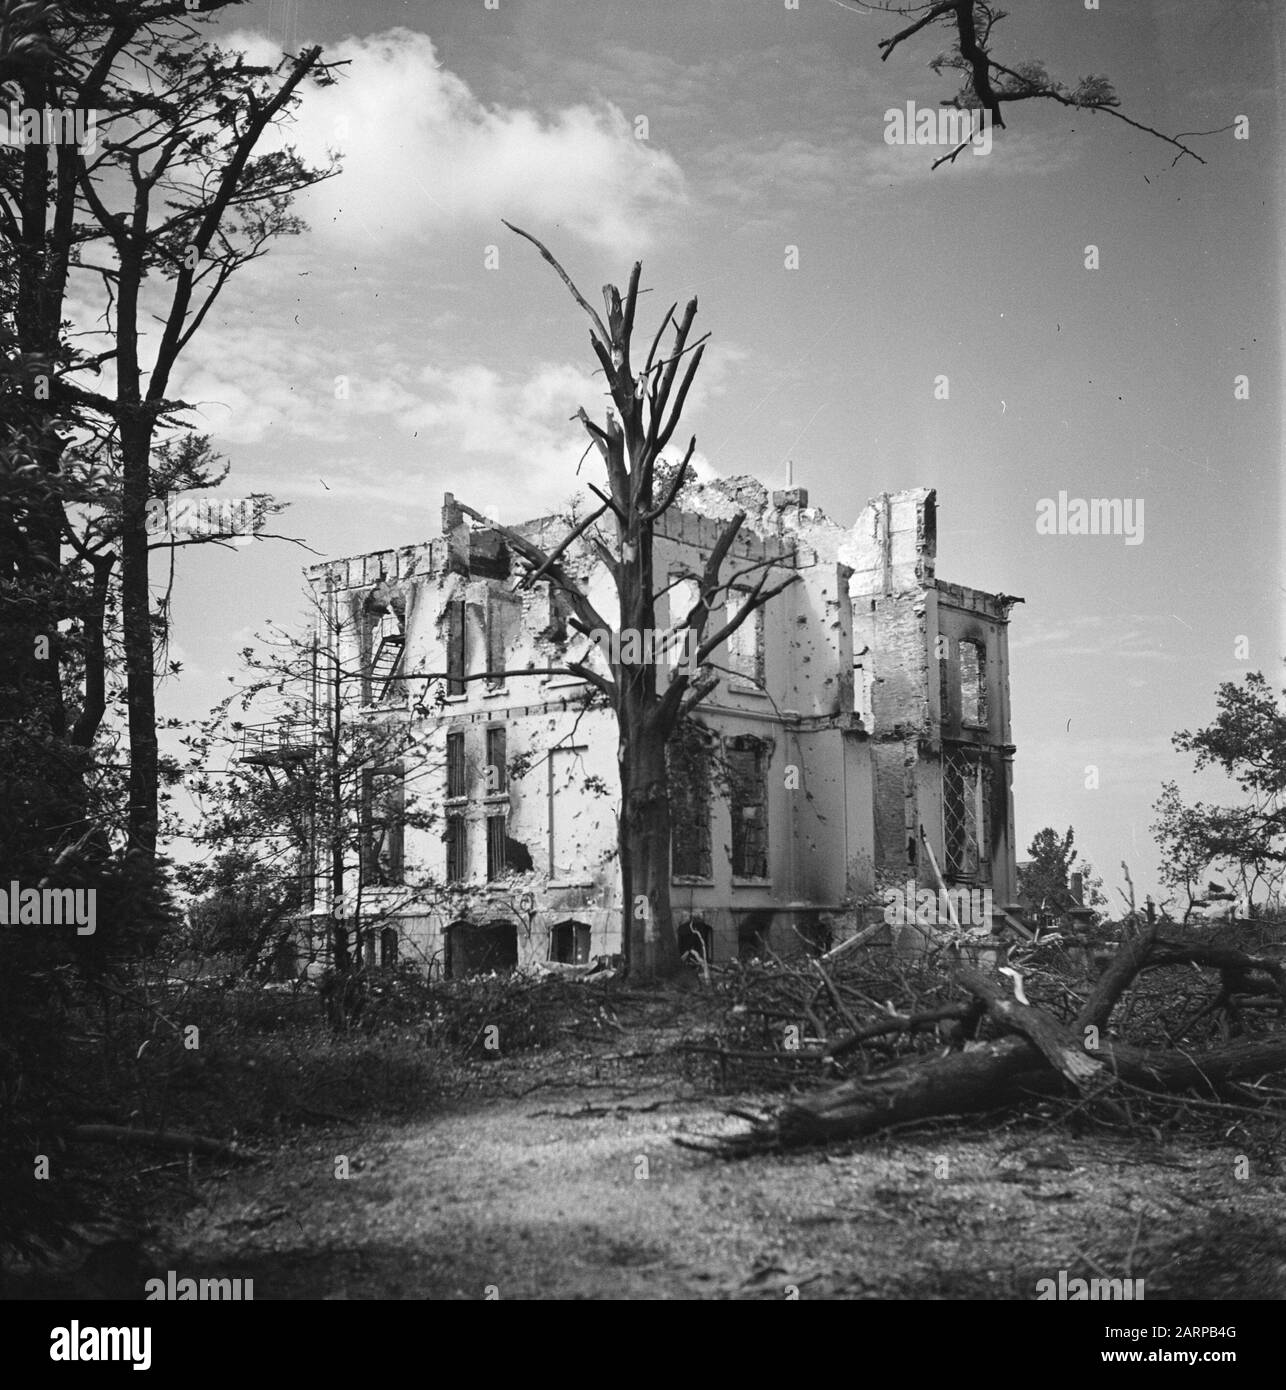 Vernielingen: Arnhem  [Destroyed villa] Date: June 1945 Location: Arnhem Keywords: buildings, World War II, destruction Stock Photo